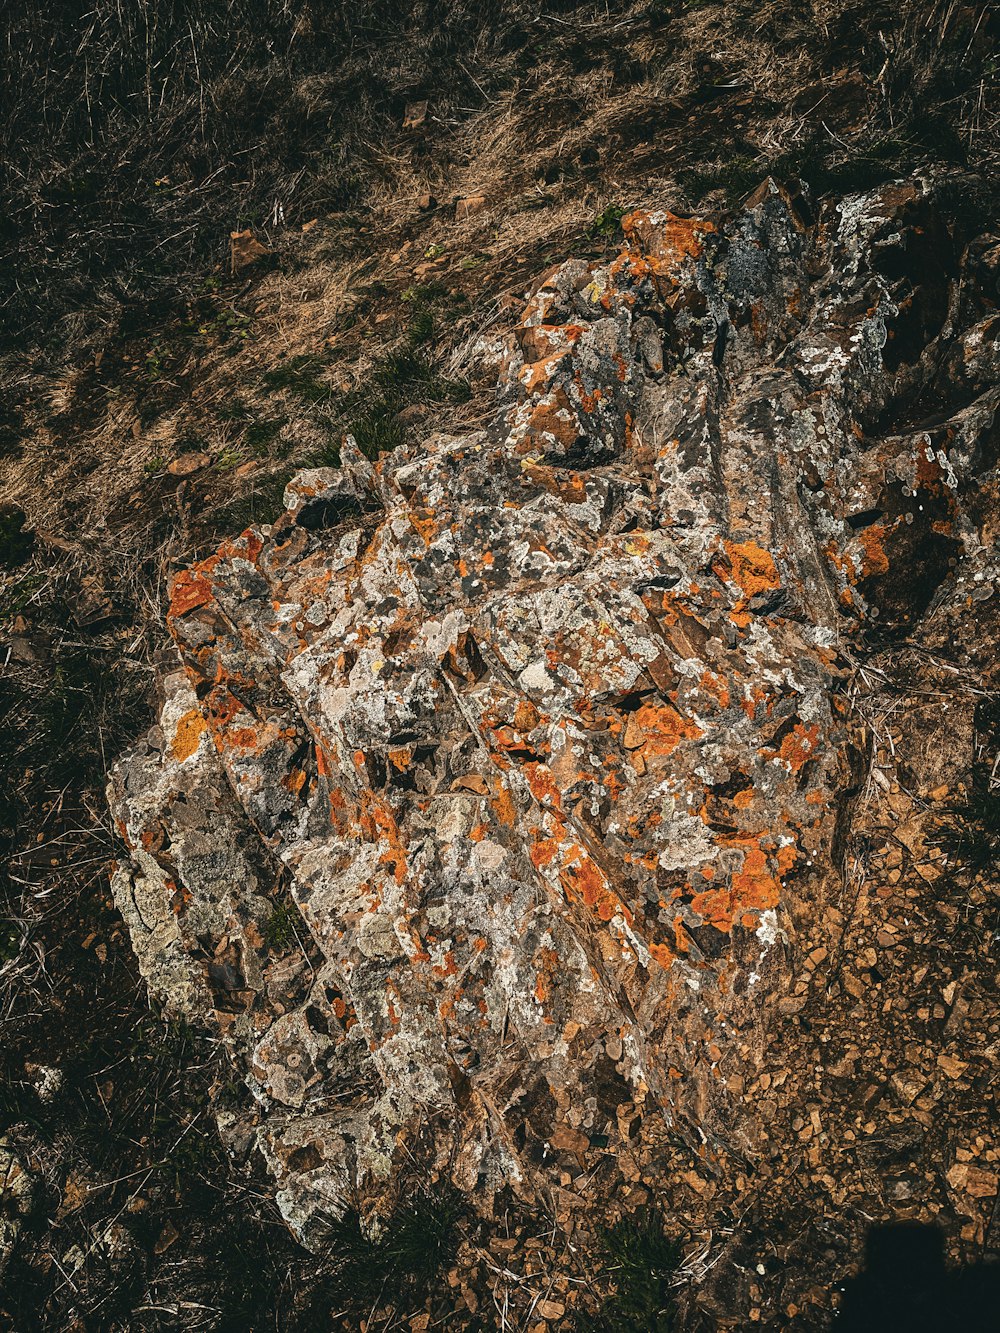 a piece of rock with orange lichen on it